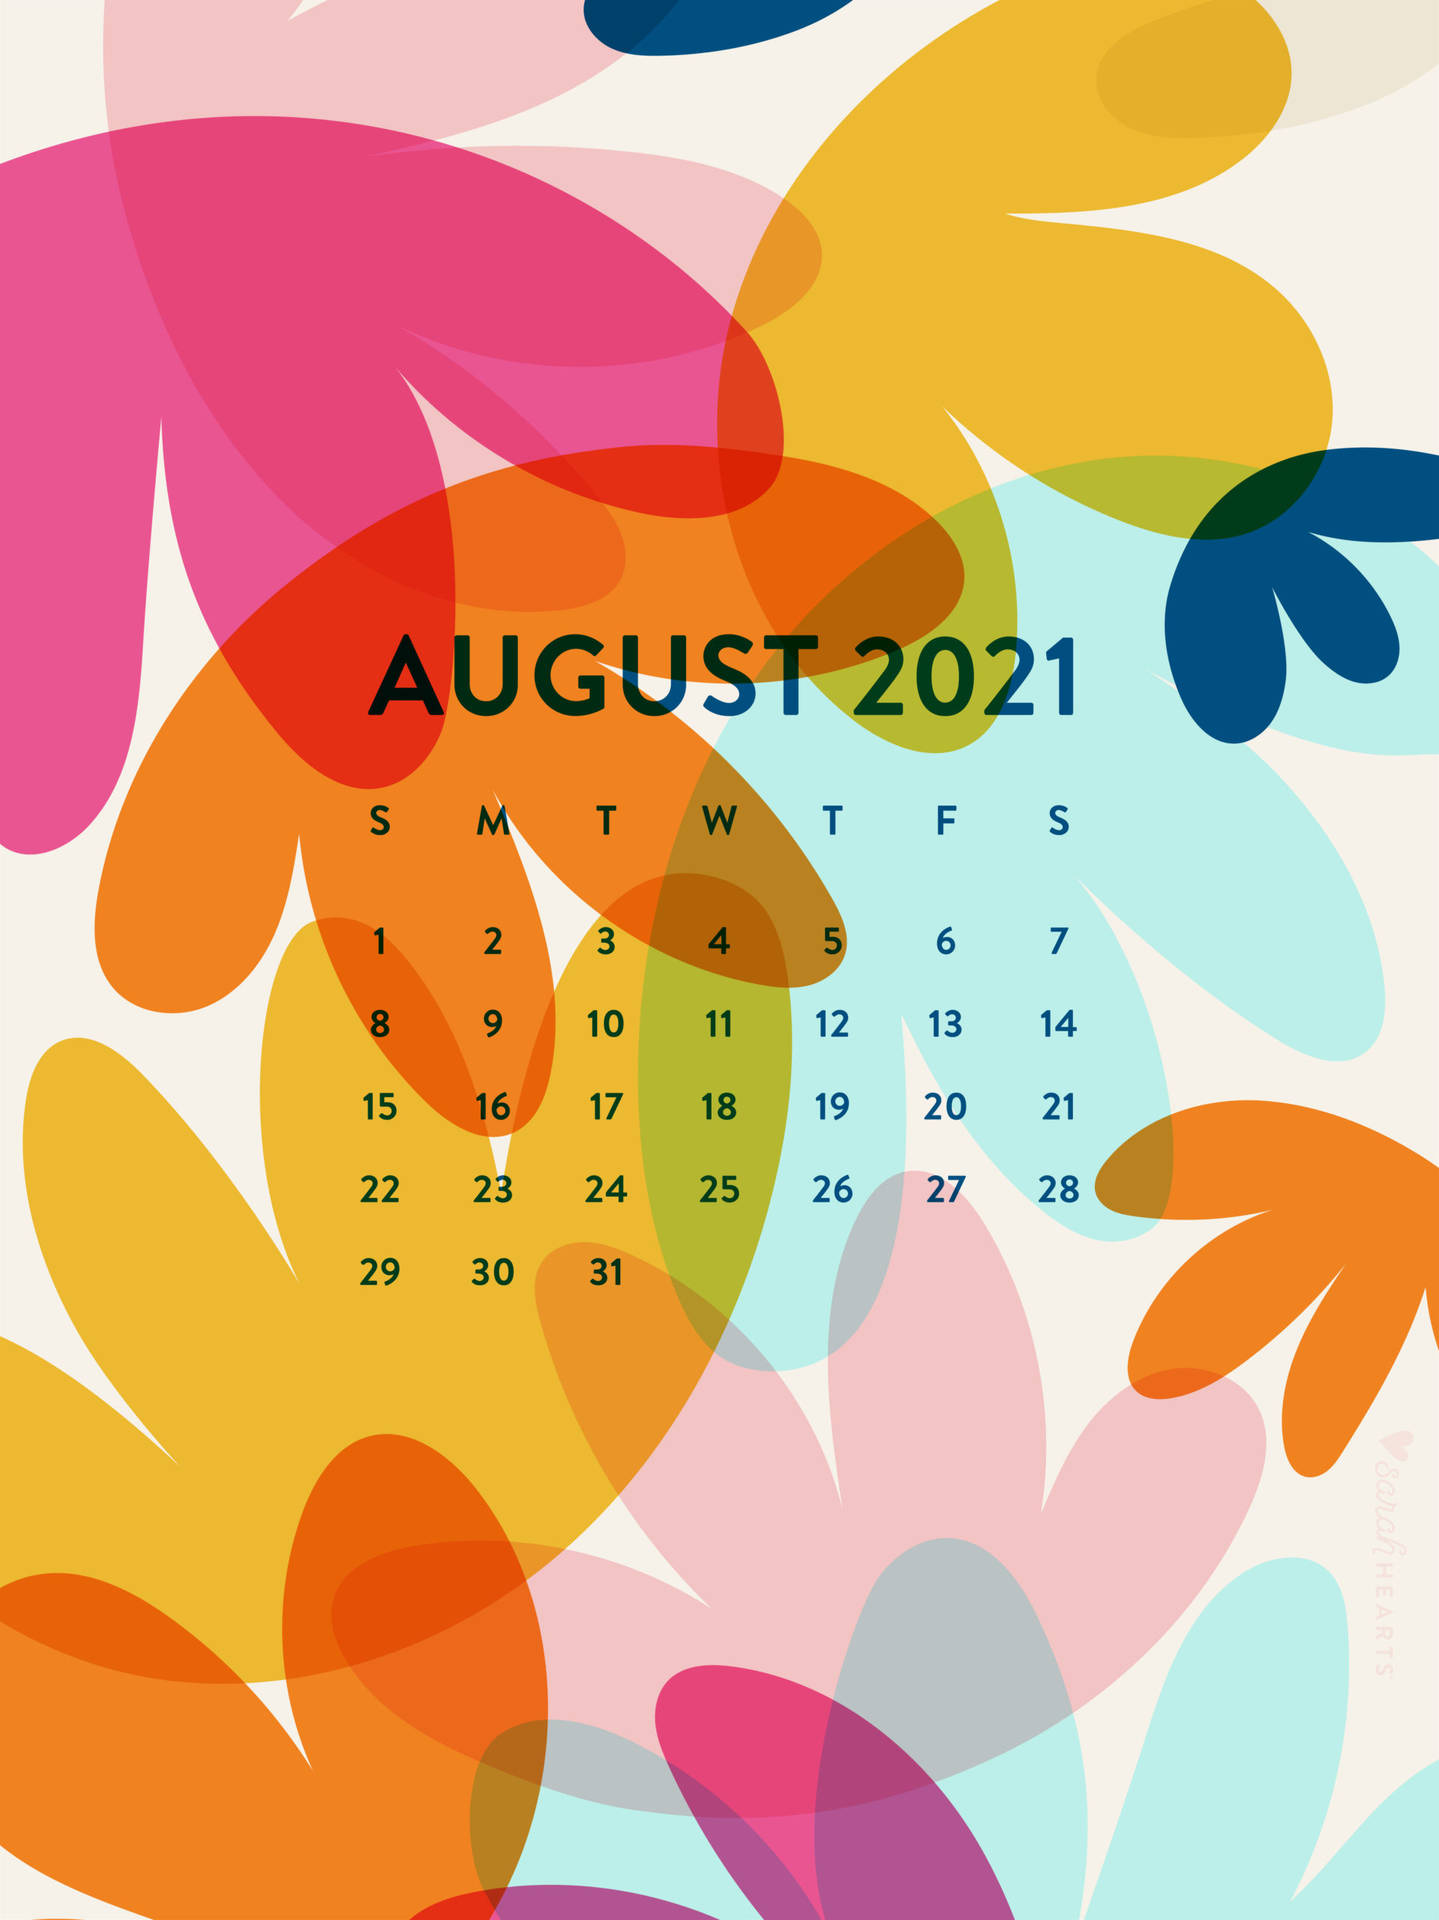 August 2021 Calendar Pictures Wallpaper